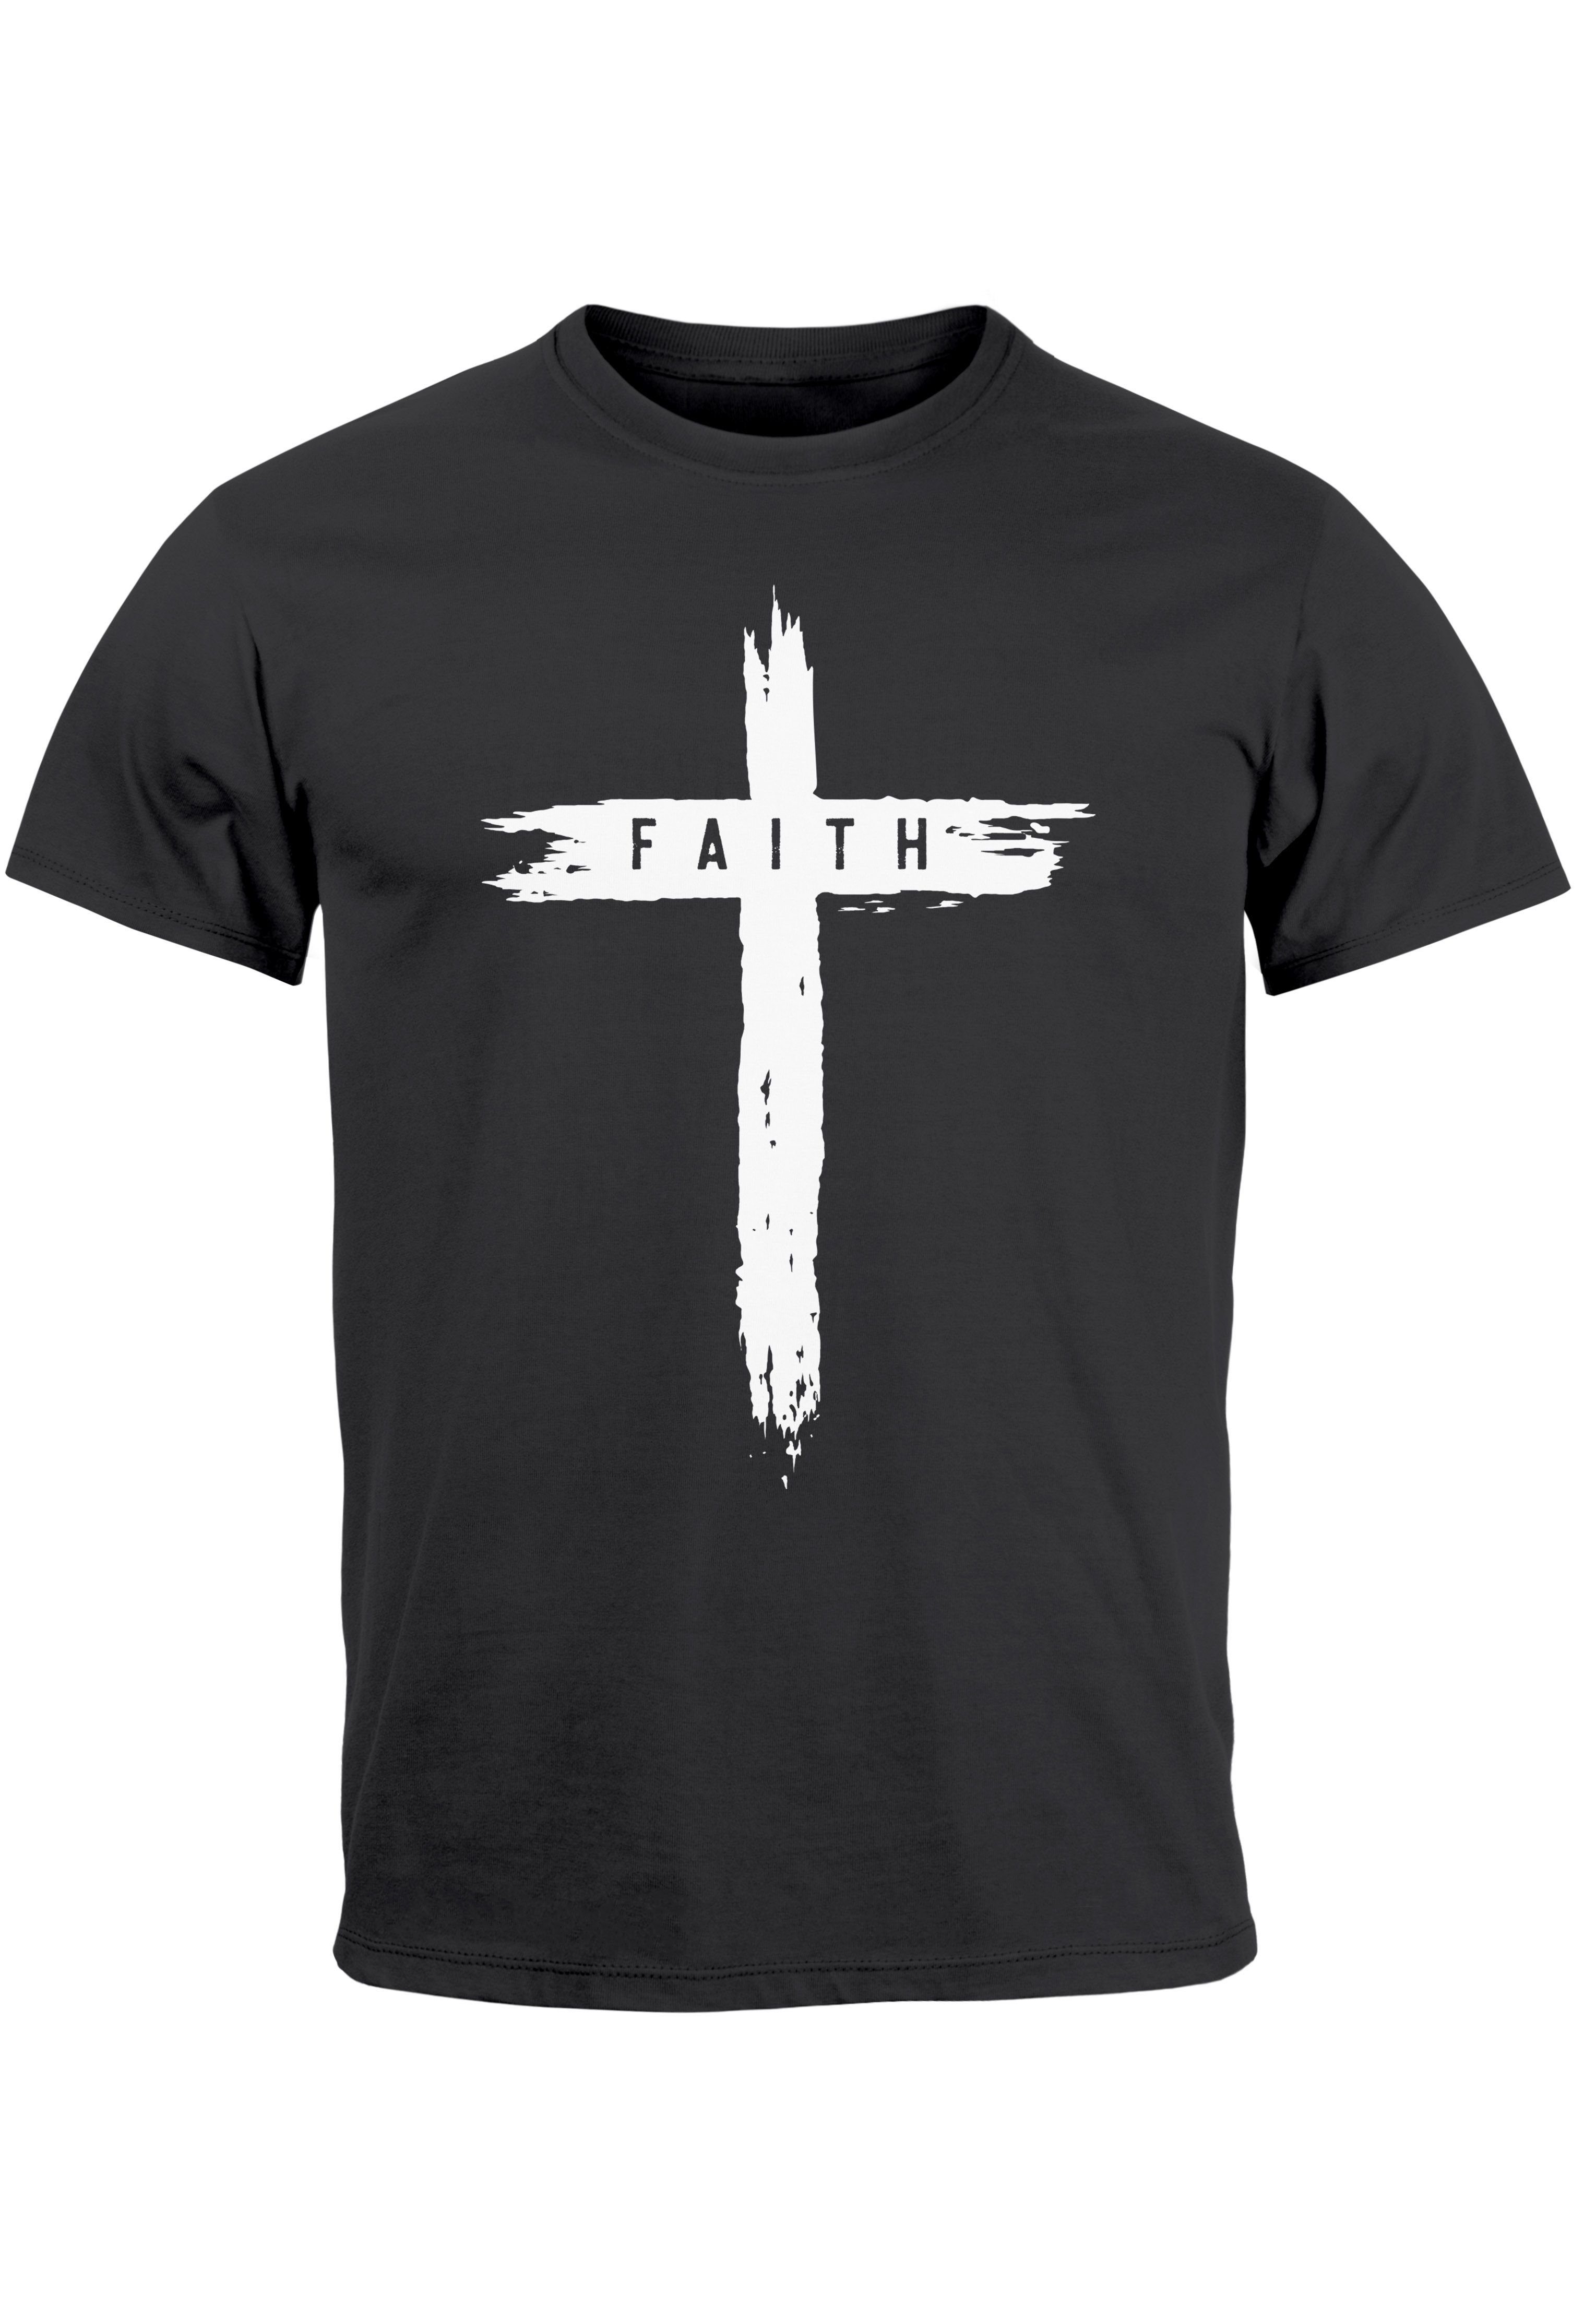 Neverless Print-Shirt Herren T-Shirt Printshirt Aufdruck Kreuz Cross Faith Glaube Trend-Moti mit Print anthrazit